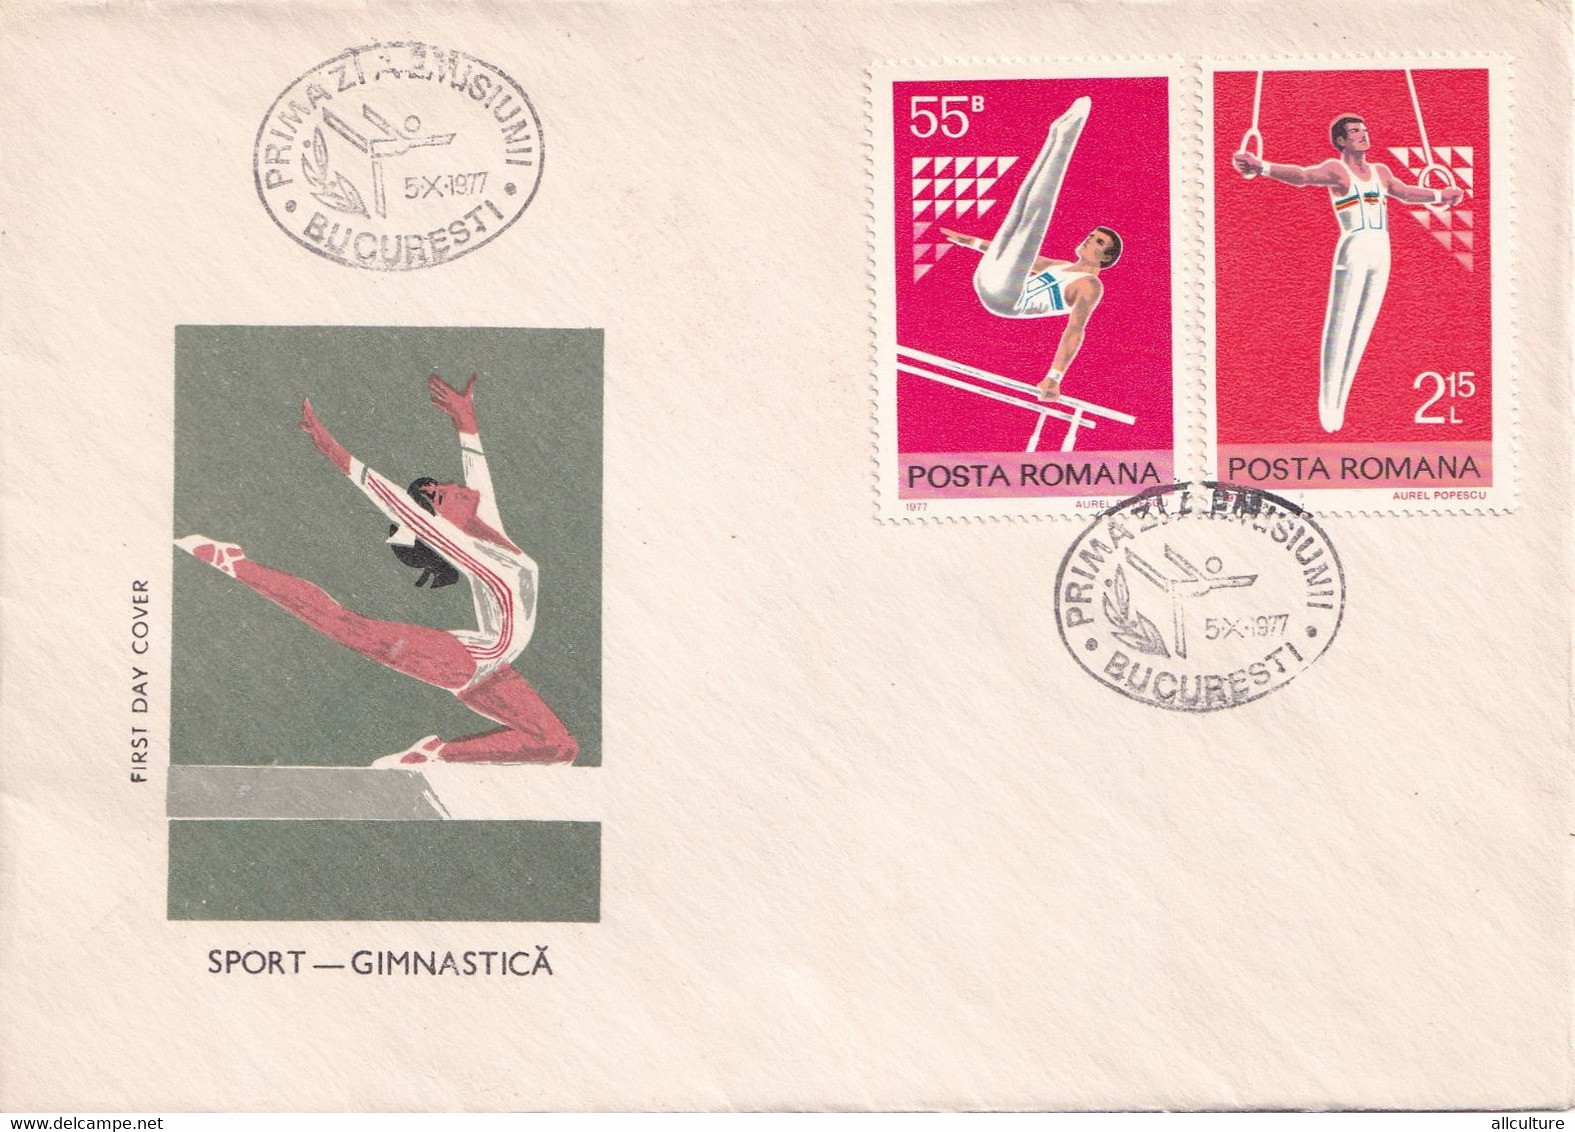 A2688- Sport - Gimnastica ,Romania, Bucuresti 1977 3 Covers FDC - Gymnastics